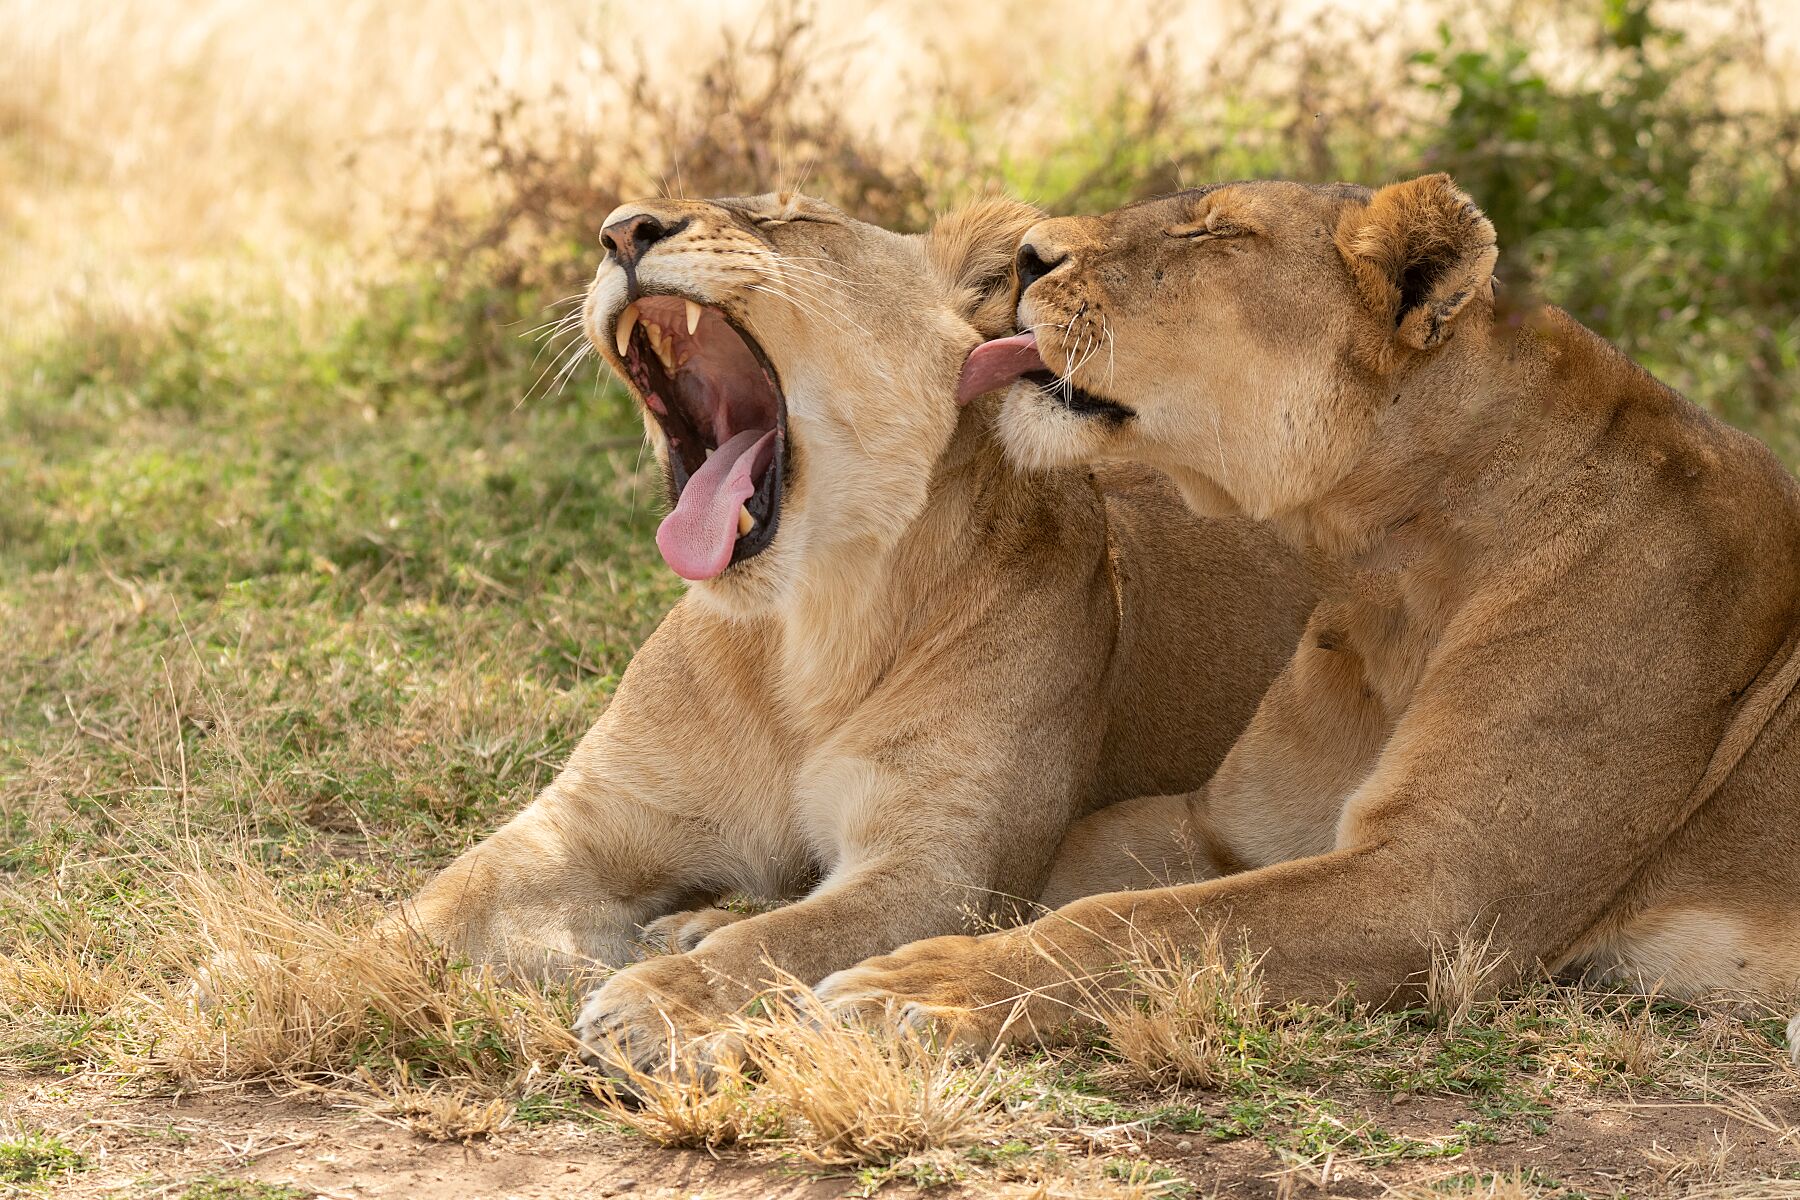 2 lions bonding